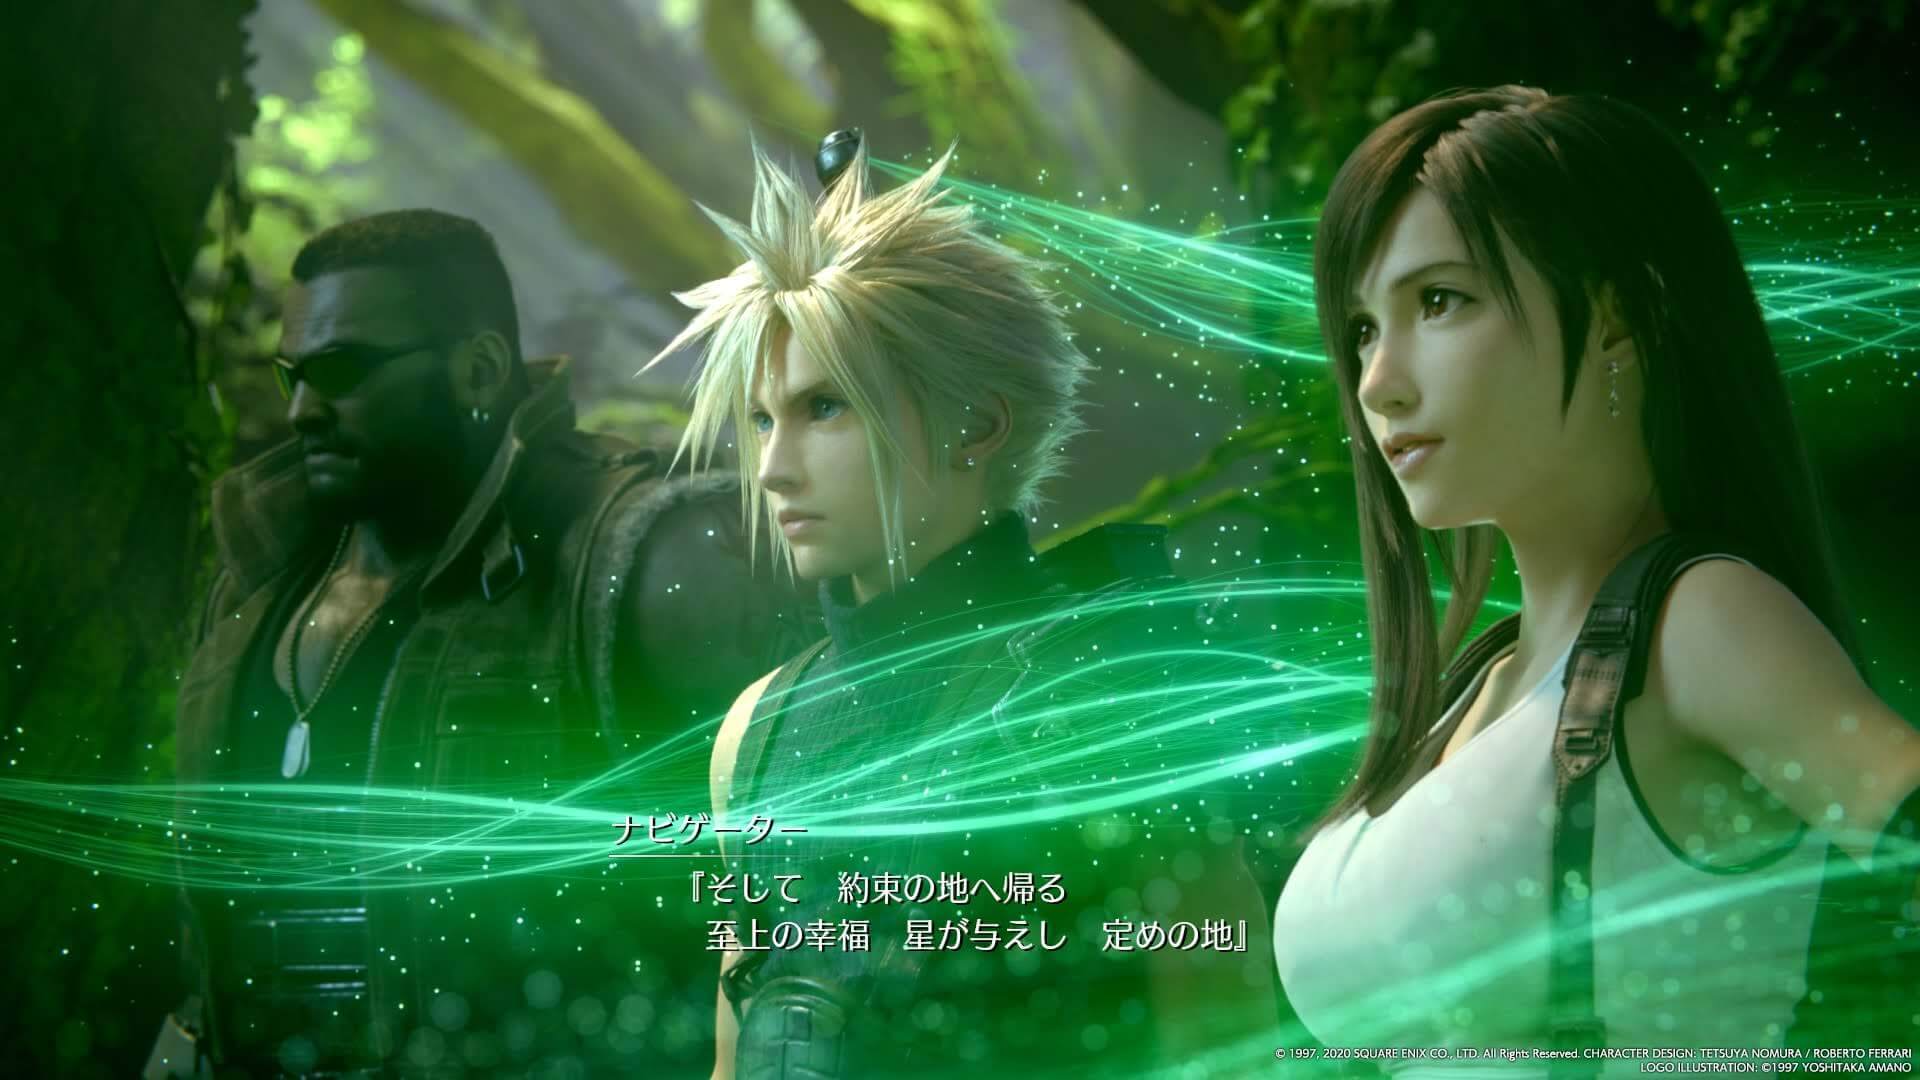 Ff7r Final Fantasy7 Remake Inspection フリーランスライフスタイルマガジン